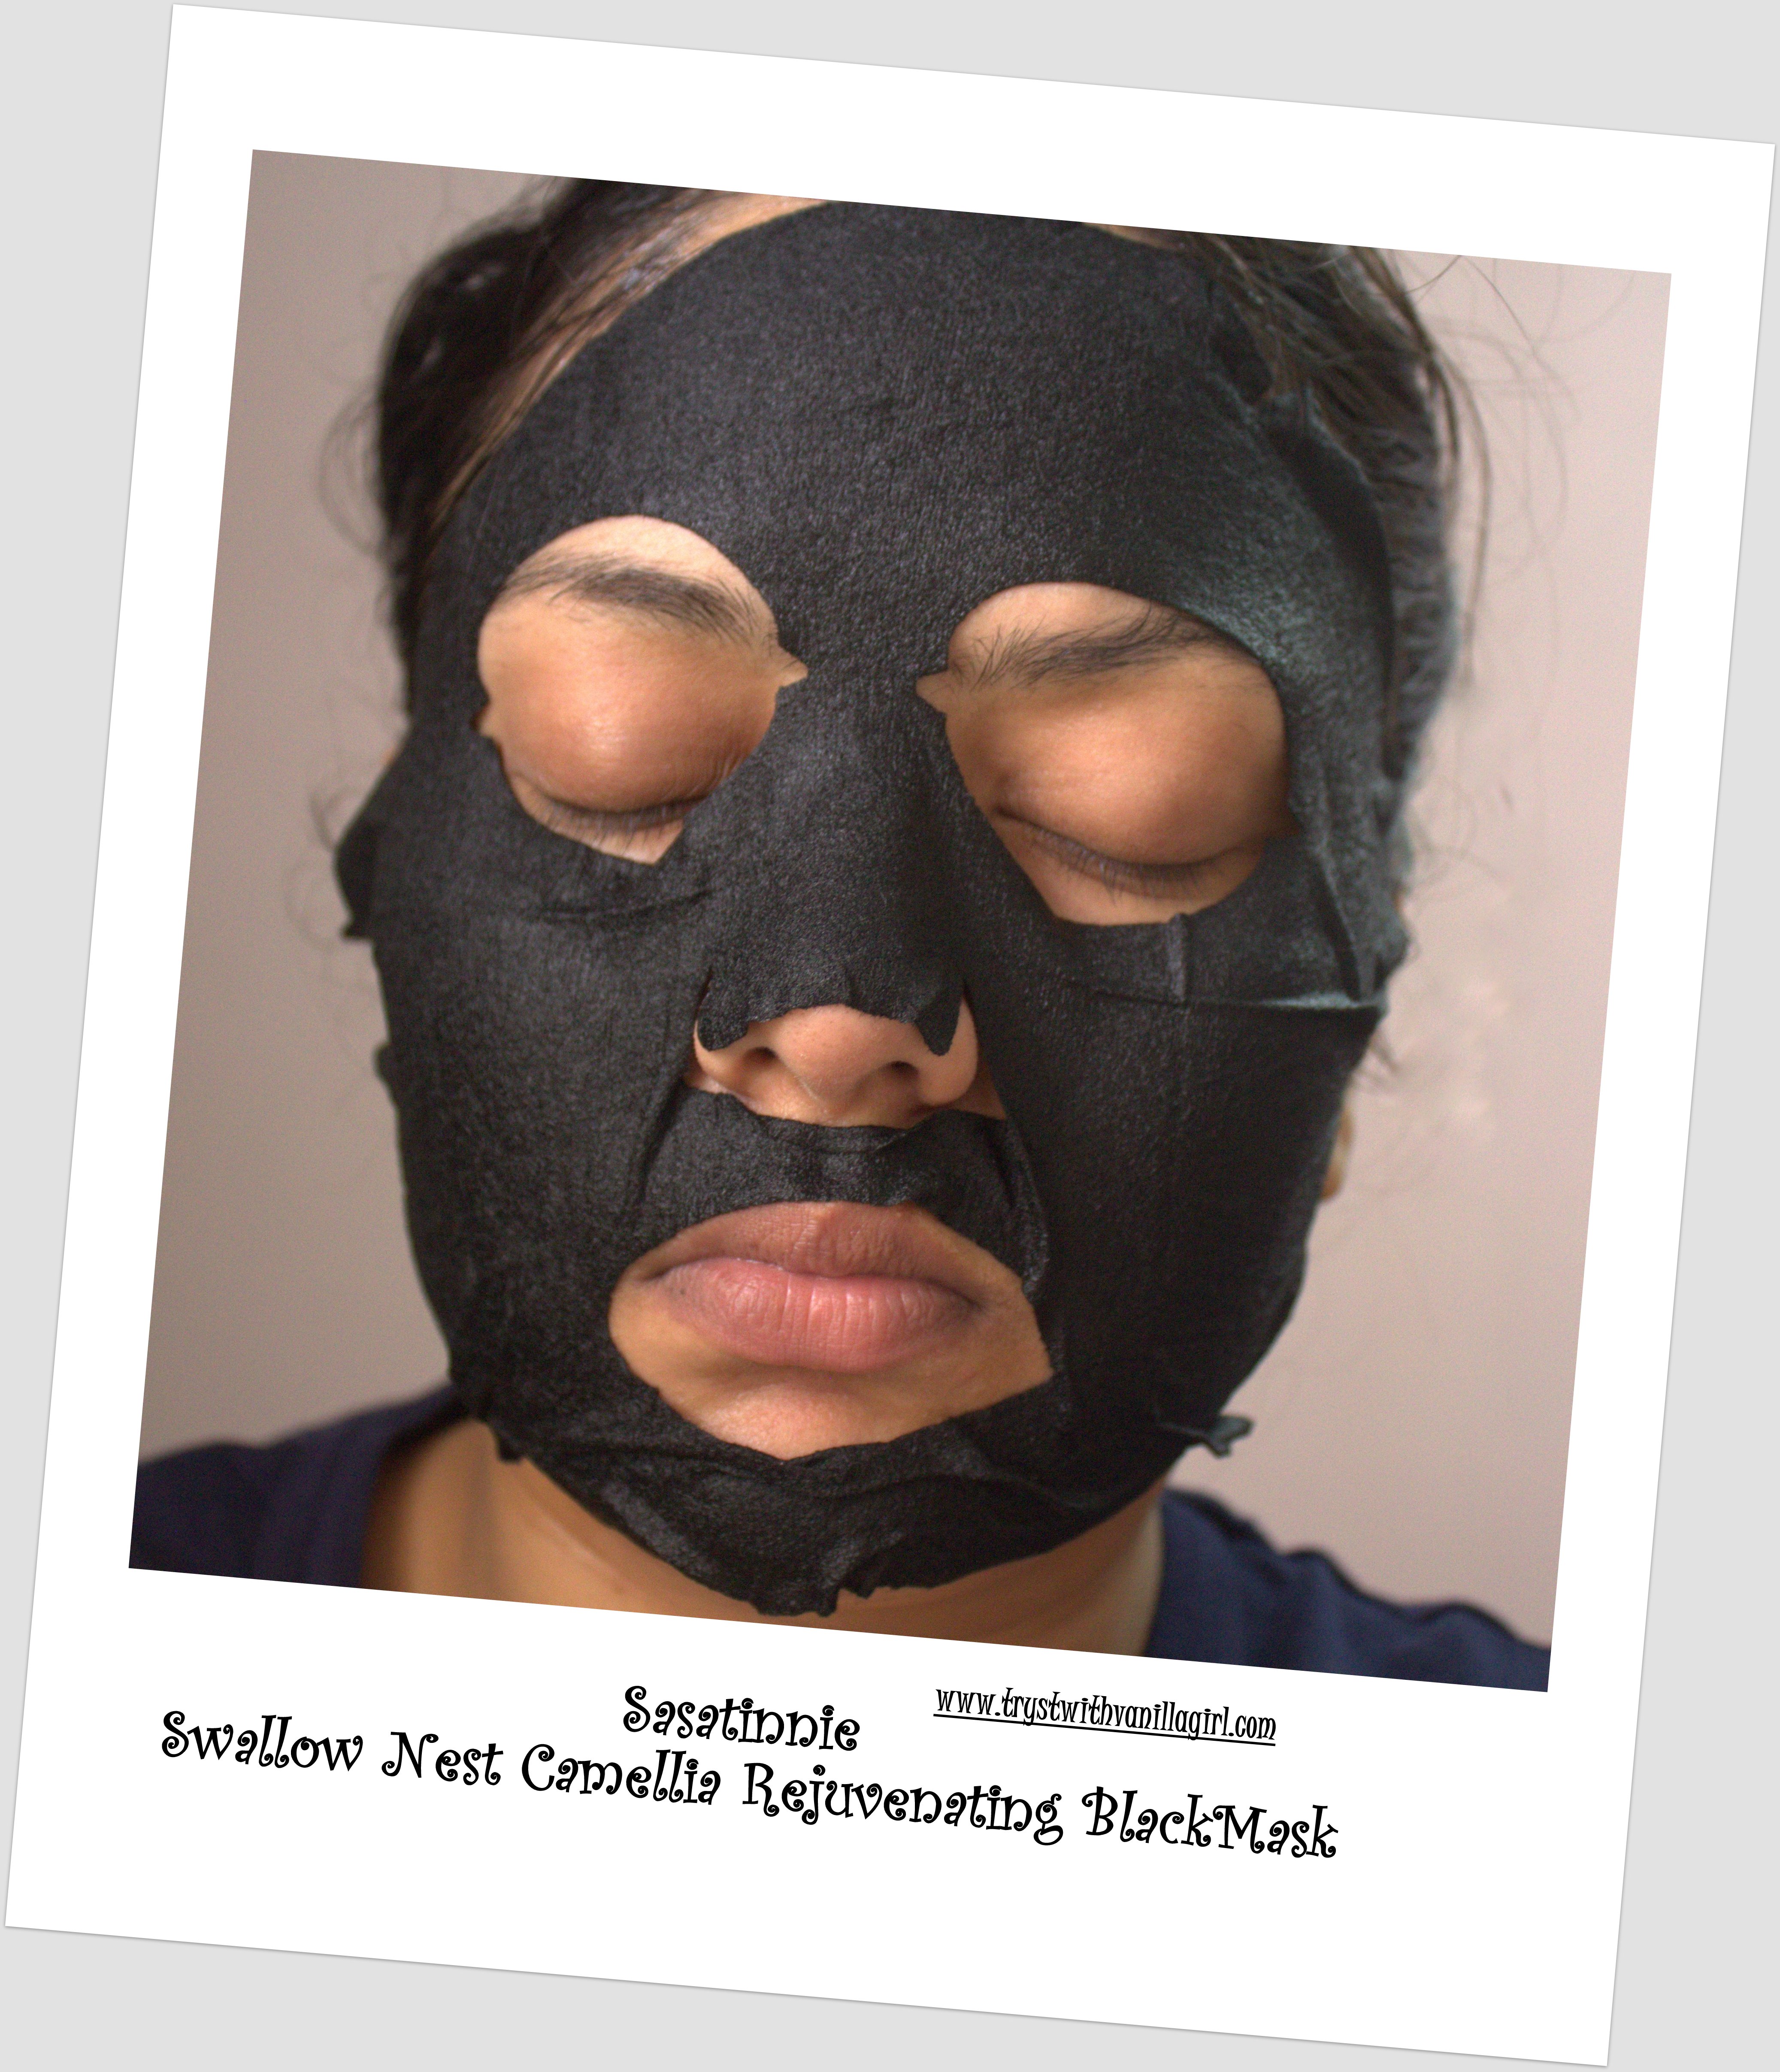 Sasatinnie Swallow’s Nest Camellia Rejuvenating Black Mask Review, Photos